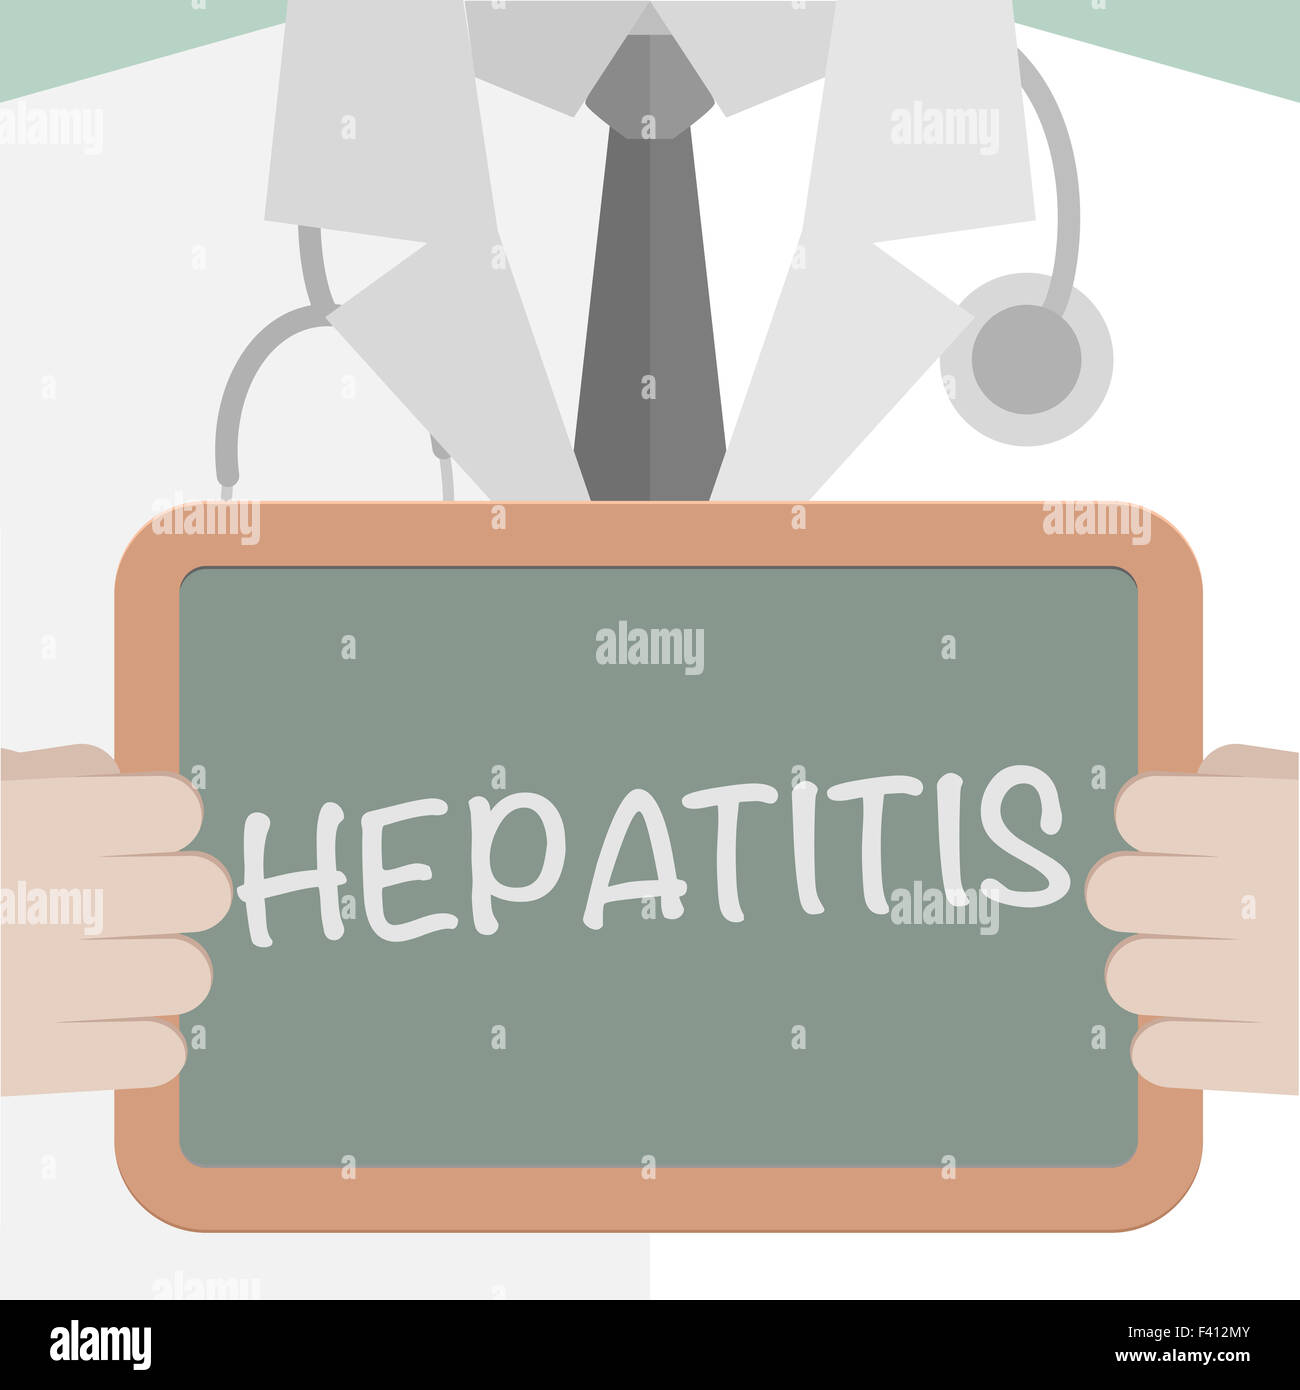 Medical Board Hepatitis Stock Photo